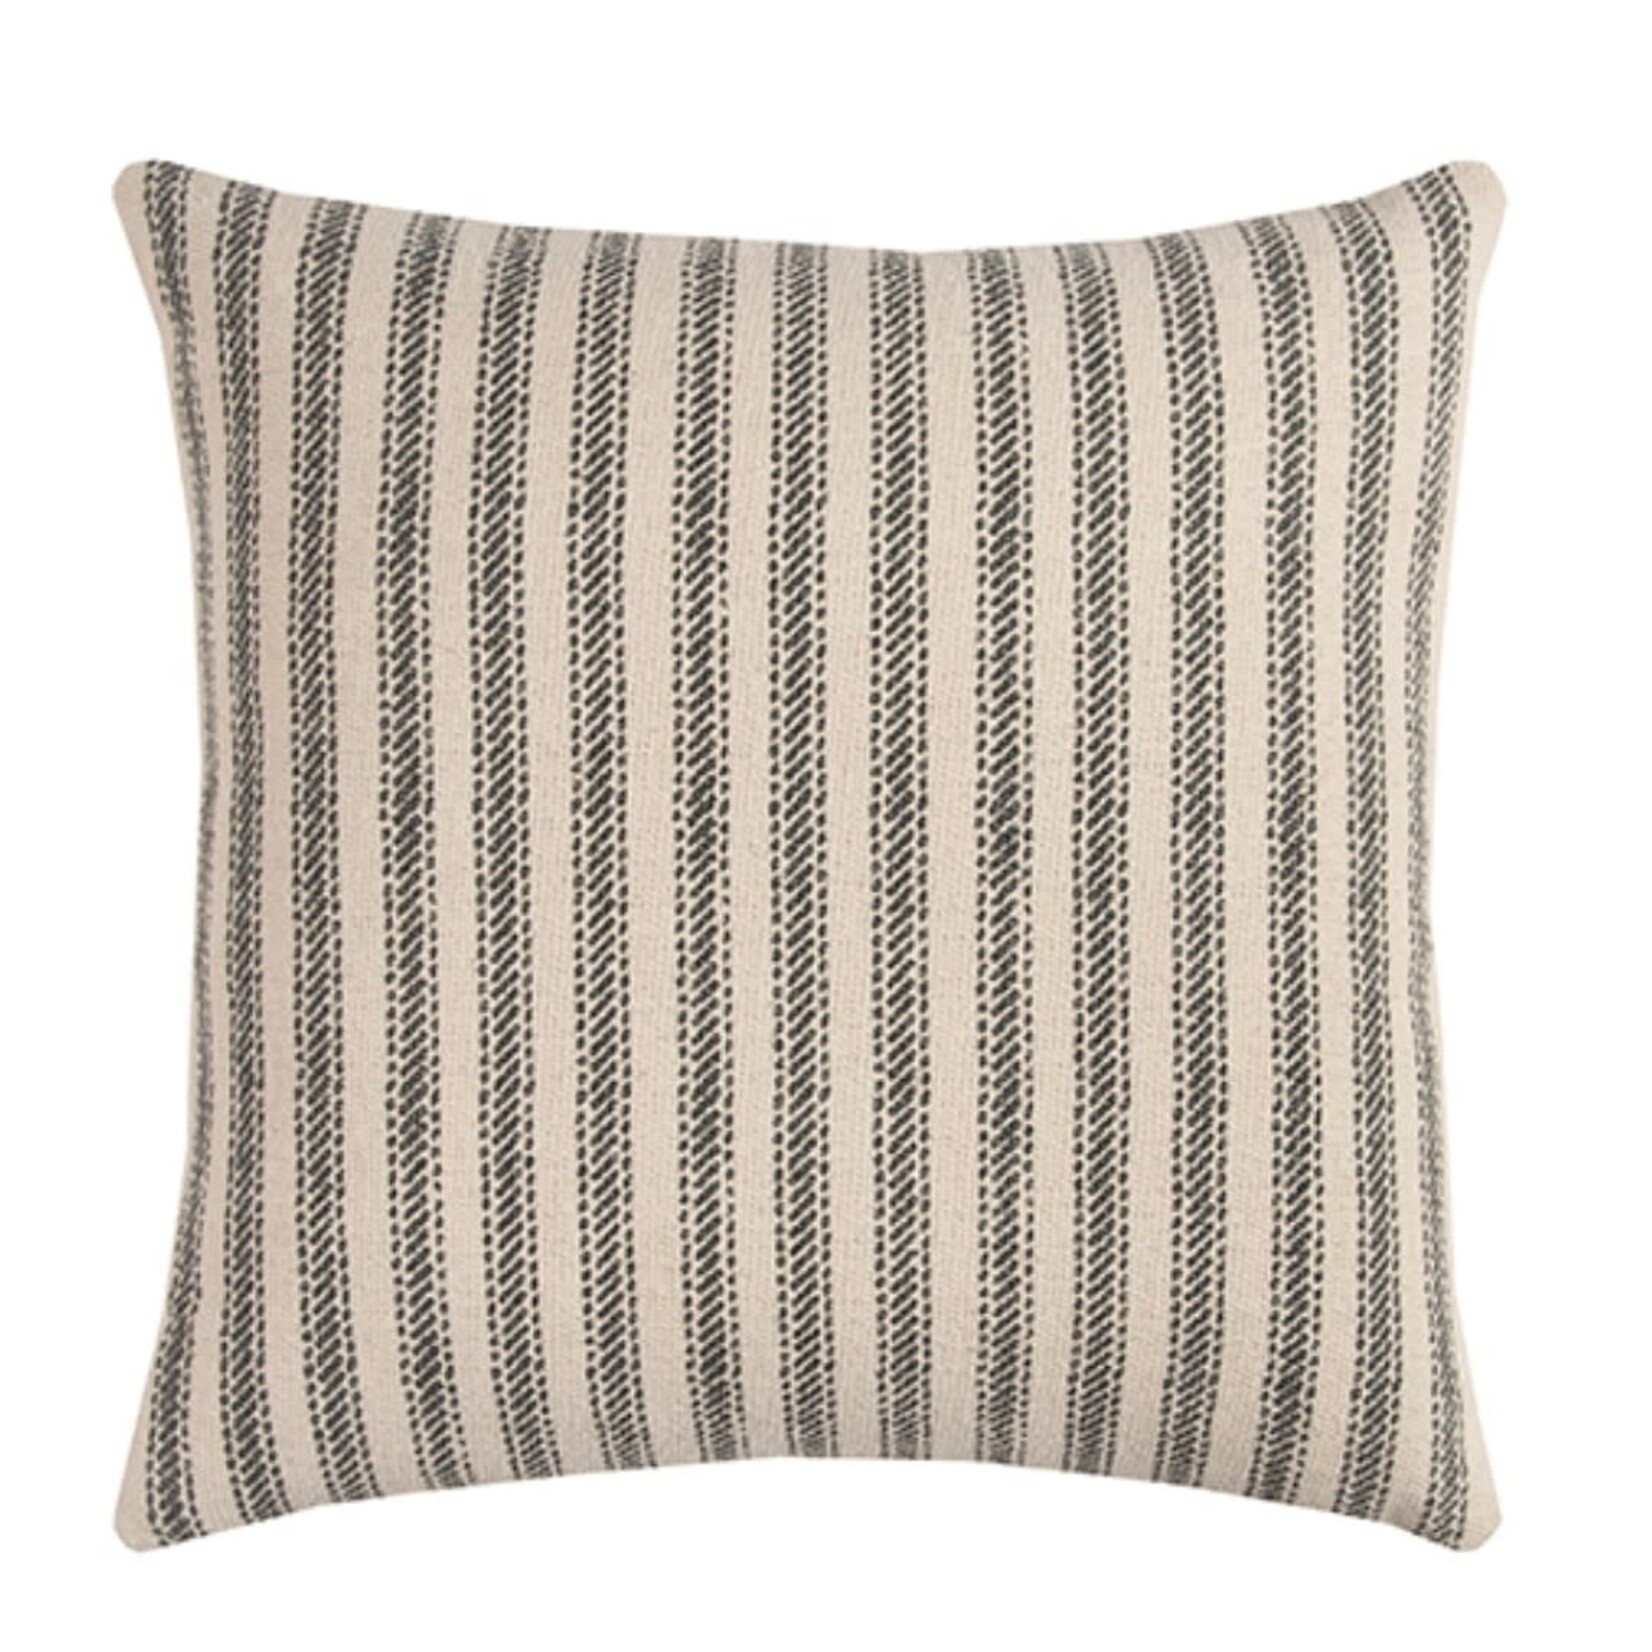 Mickler & Co. Striped Cotton Throw Pillow